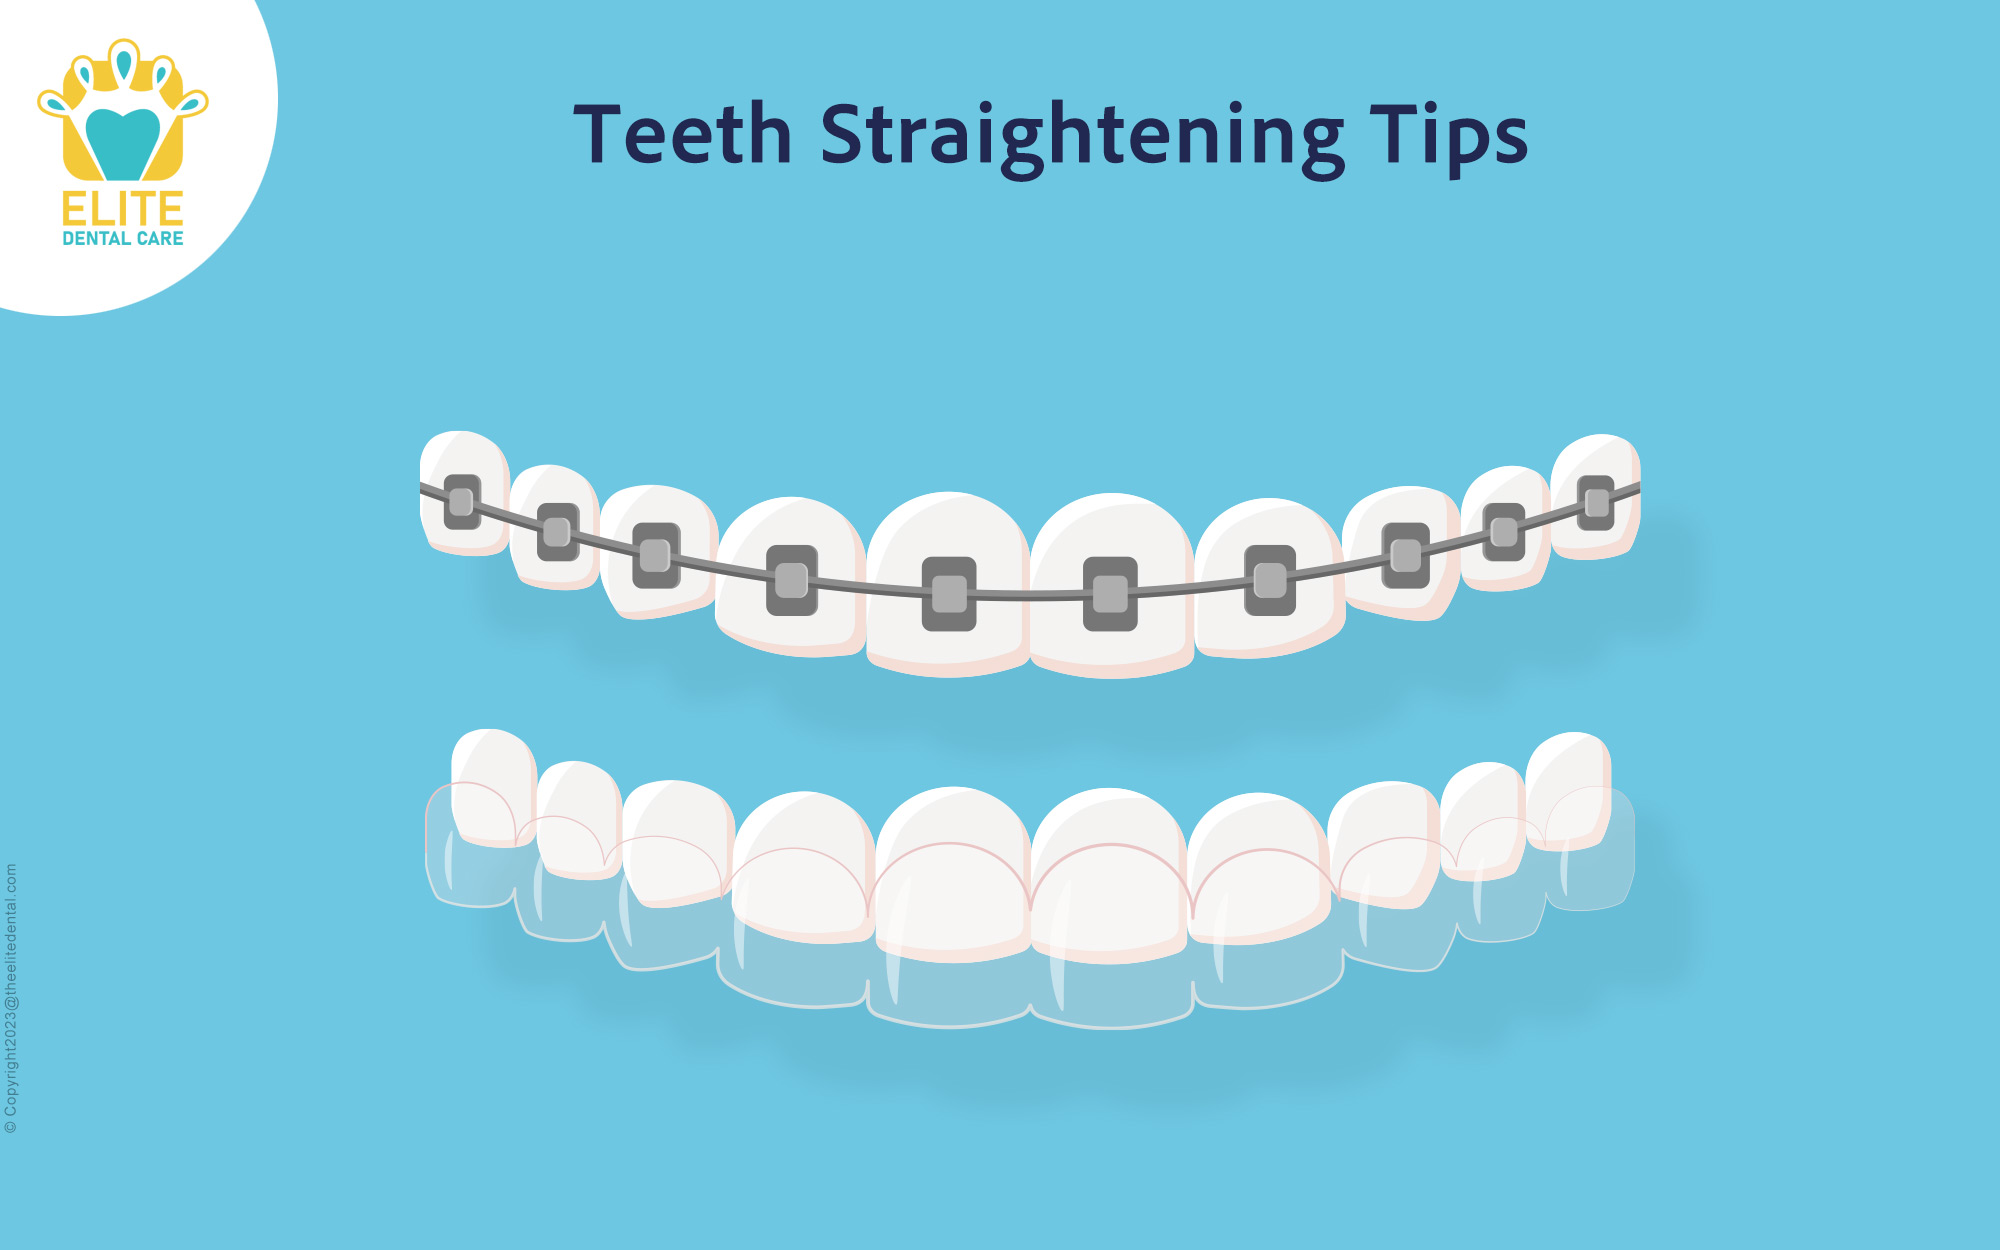 Teeth straightening tips